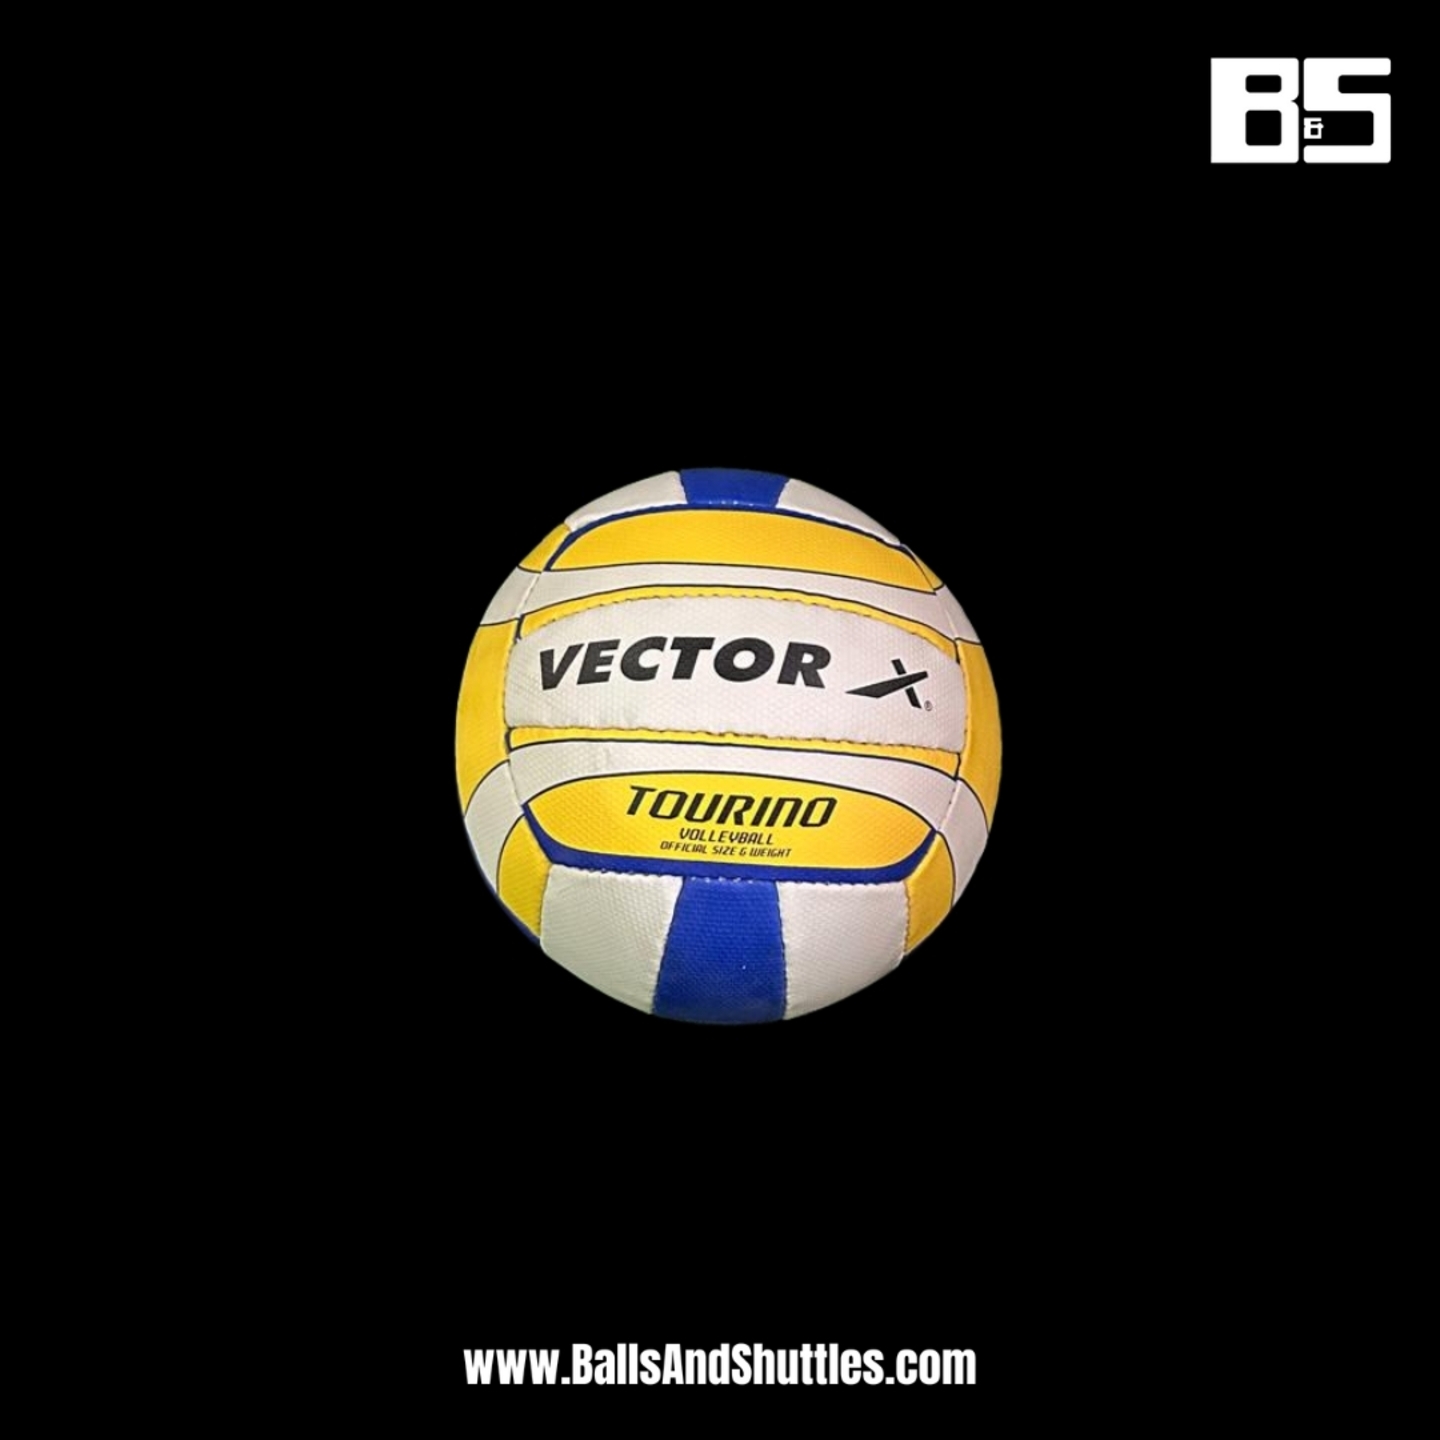 VECTOR X TOURINO VOLLEYBALL | VECTOR X SIZE 4 VOLLEYBALL | VECTOR X VOLLEYBALL